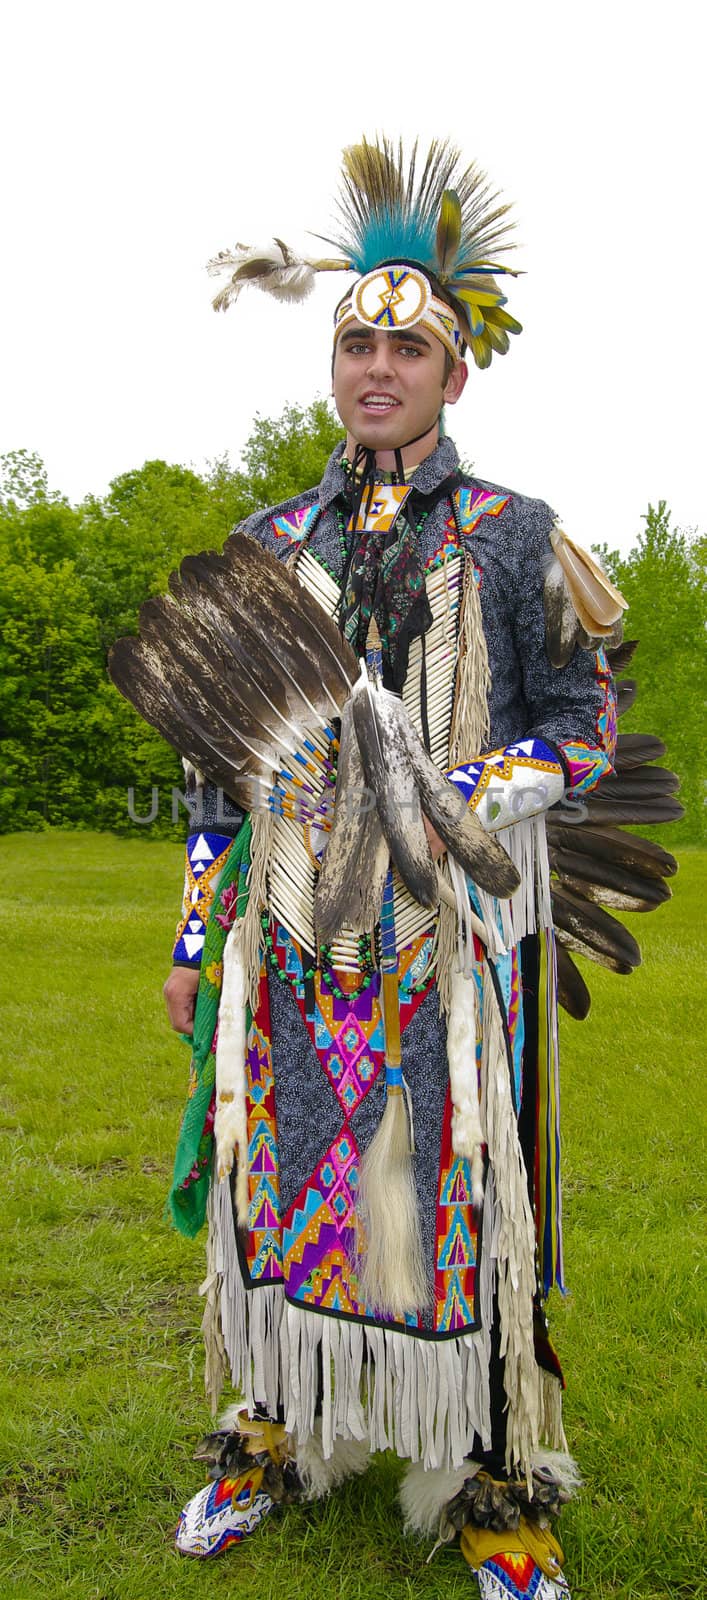 OTTAWA, CANADA - MAY 28: Unidentified aboriginal man in full dress and head regalia during the Powwow festival at Ottawa Municipal Campground in Ottawa Canada on May 28, 2011.
Photo: Michel Loiselle / yaymicro.com.